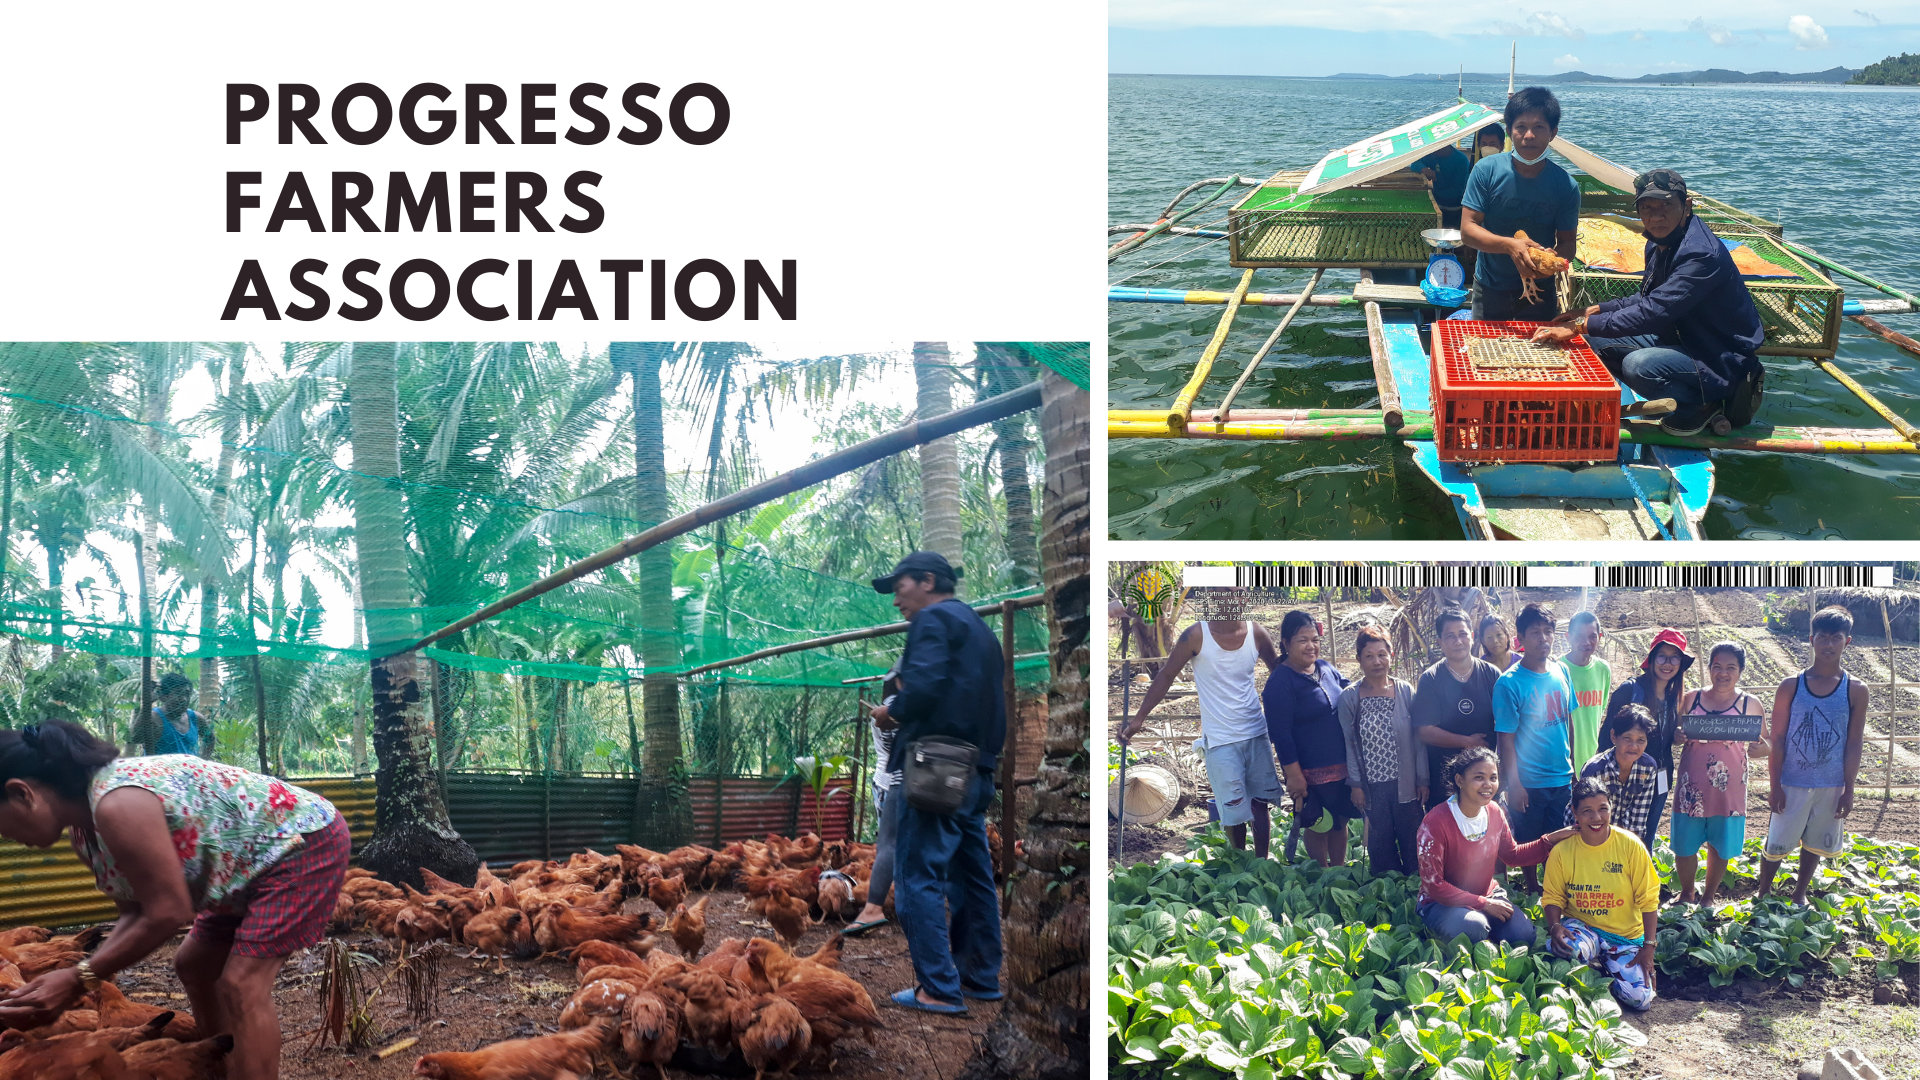 The progress of Progresso Farmers Association